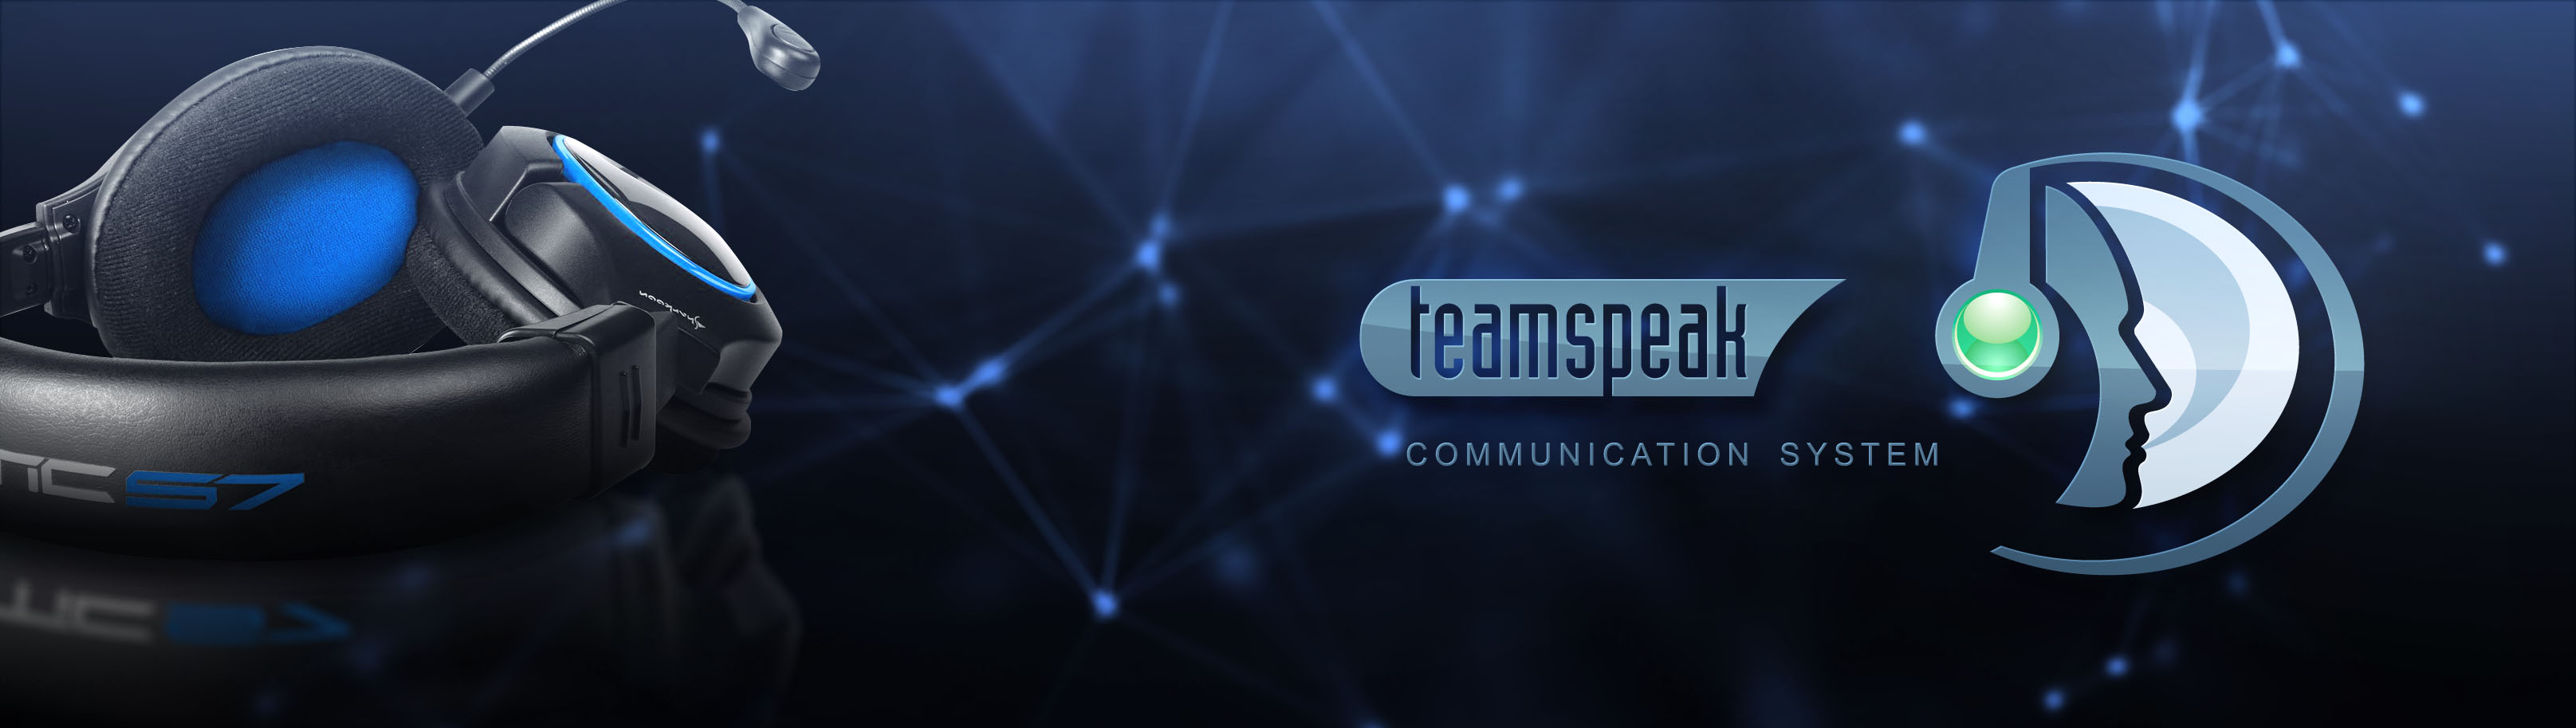 free teamspeak server